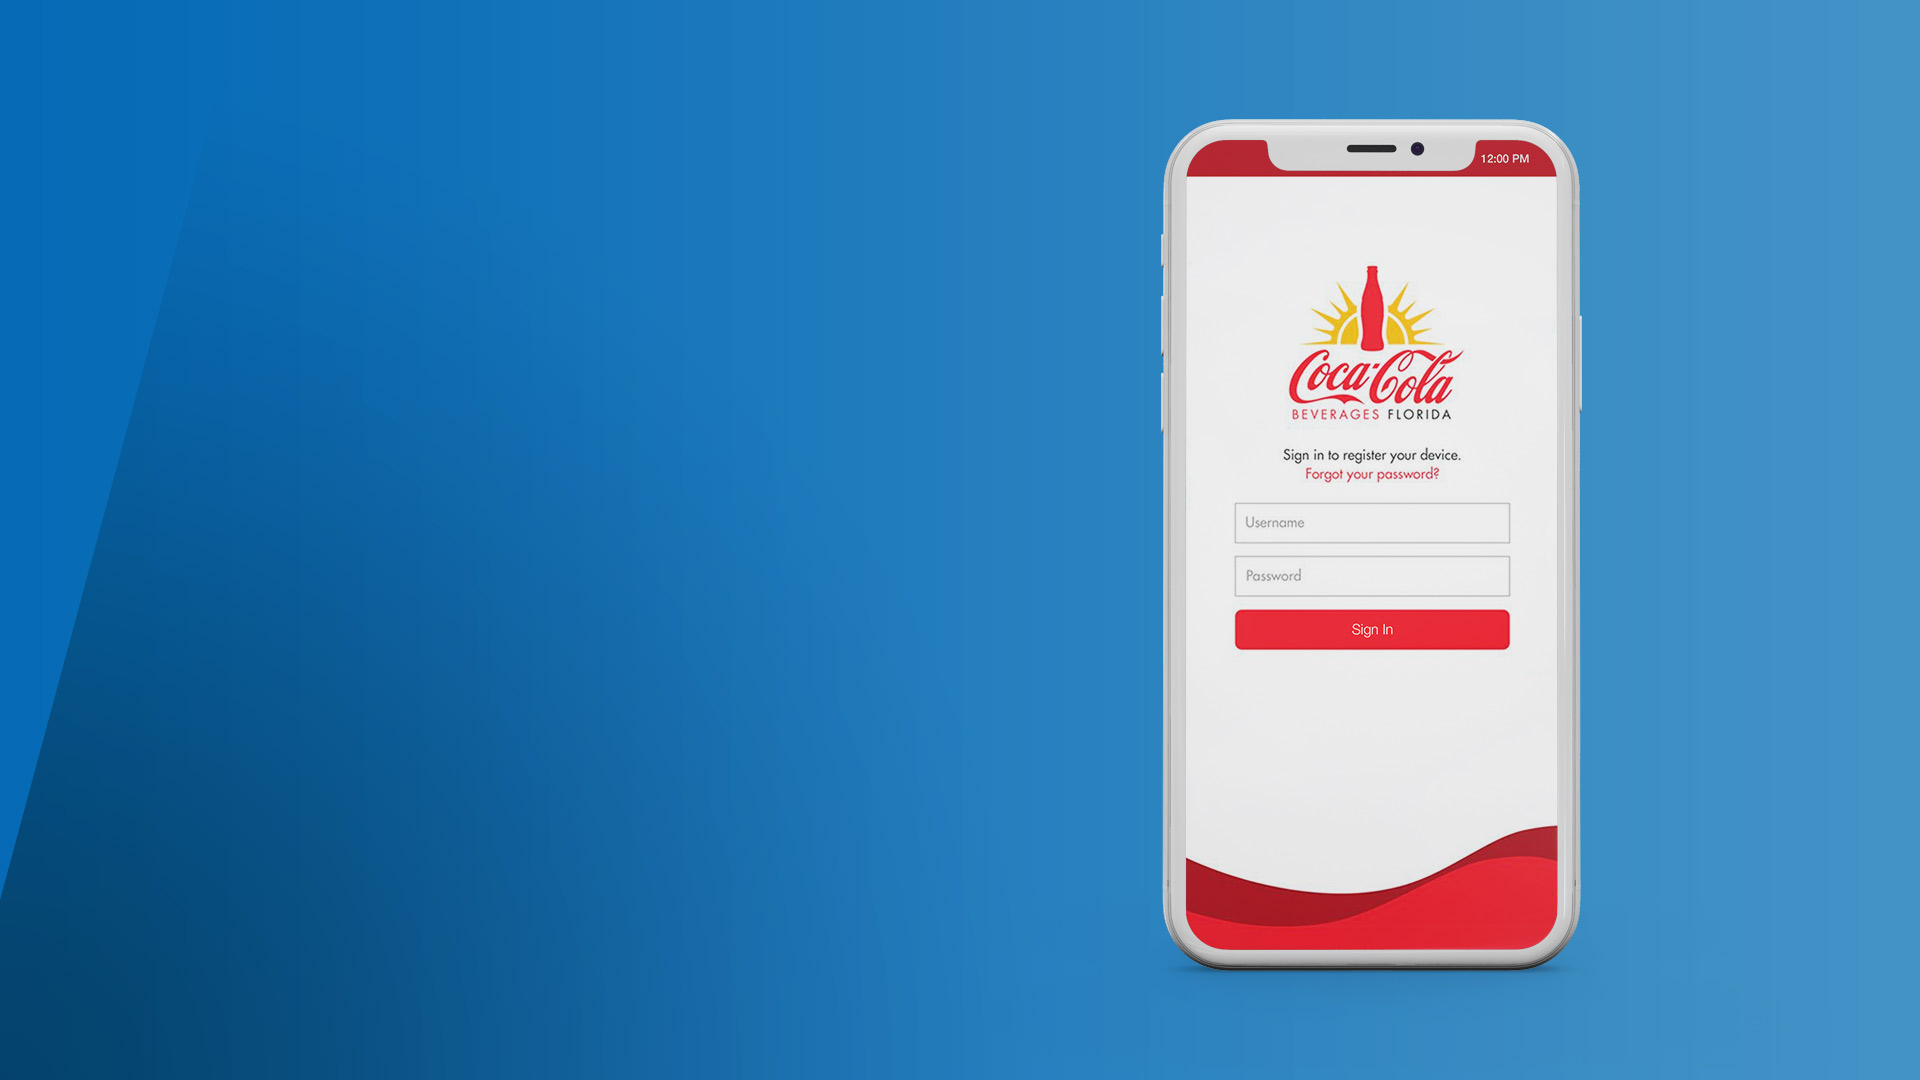 Coca-Cola Beverages Florida Shine app hero display